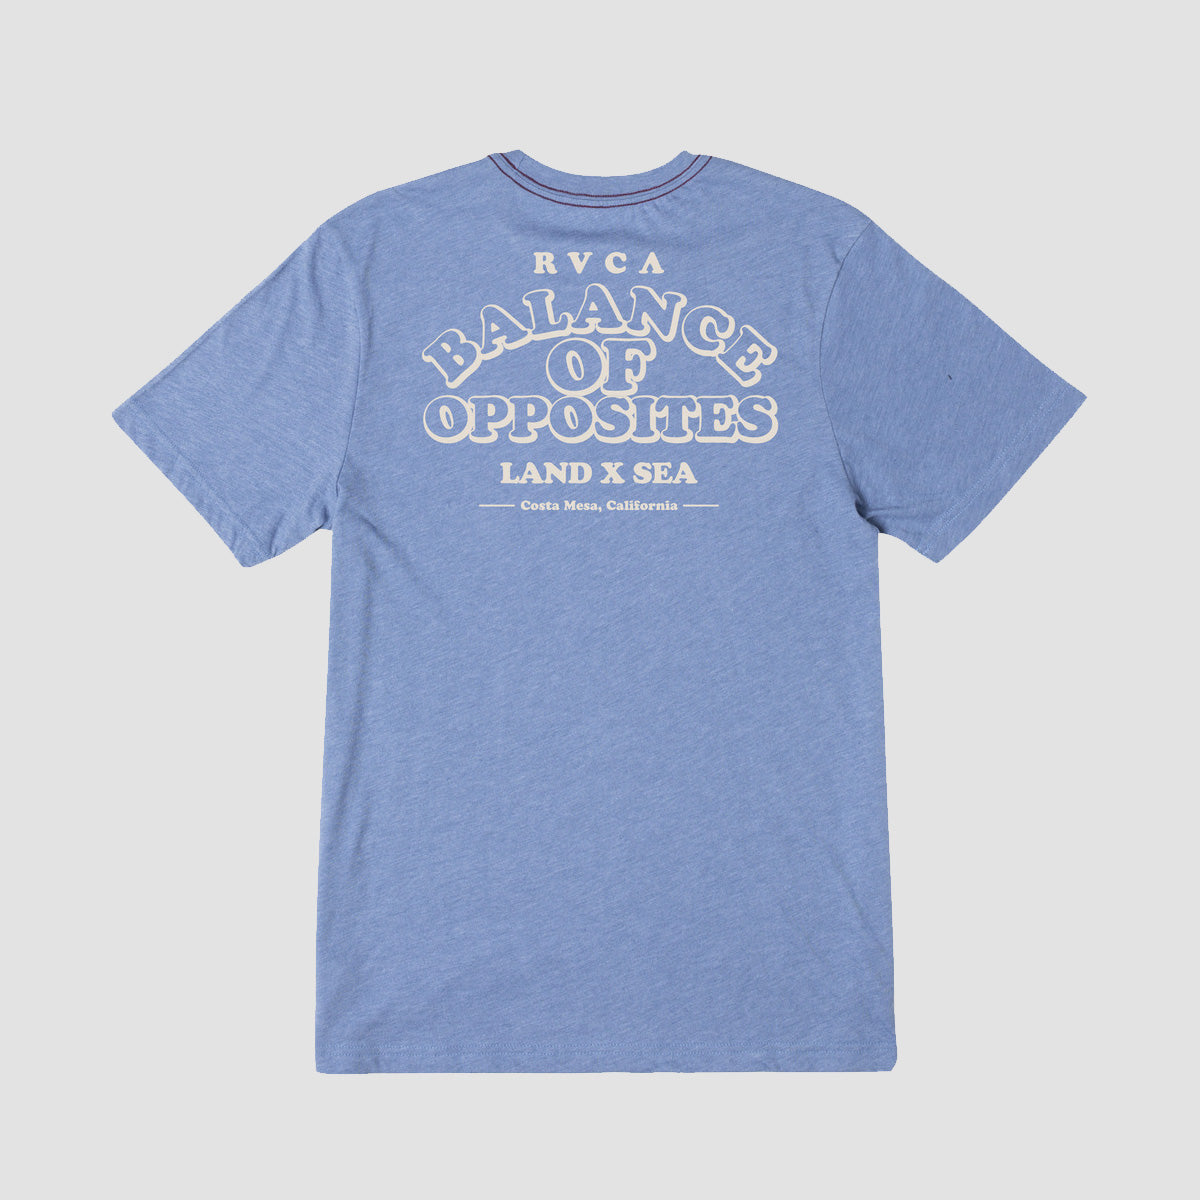 RVCA Landseer T-Shirt French Blue - Kids